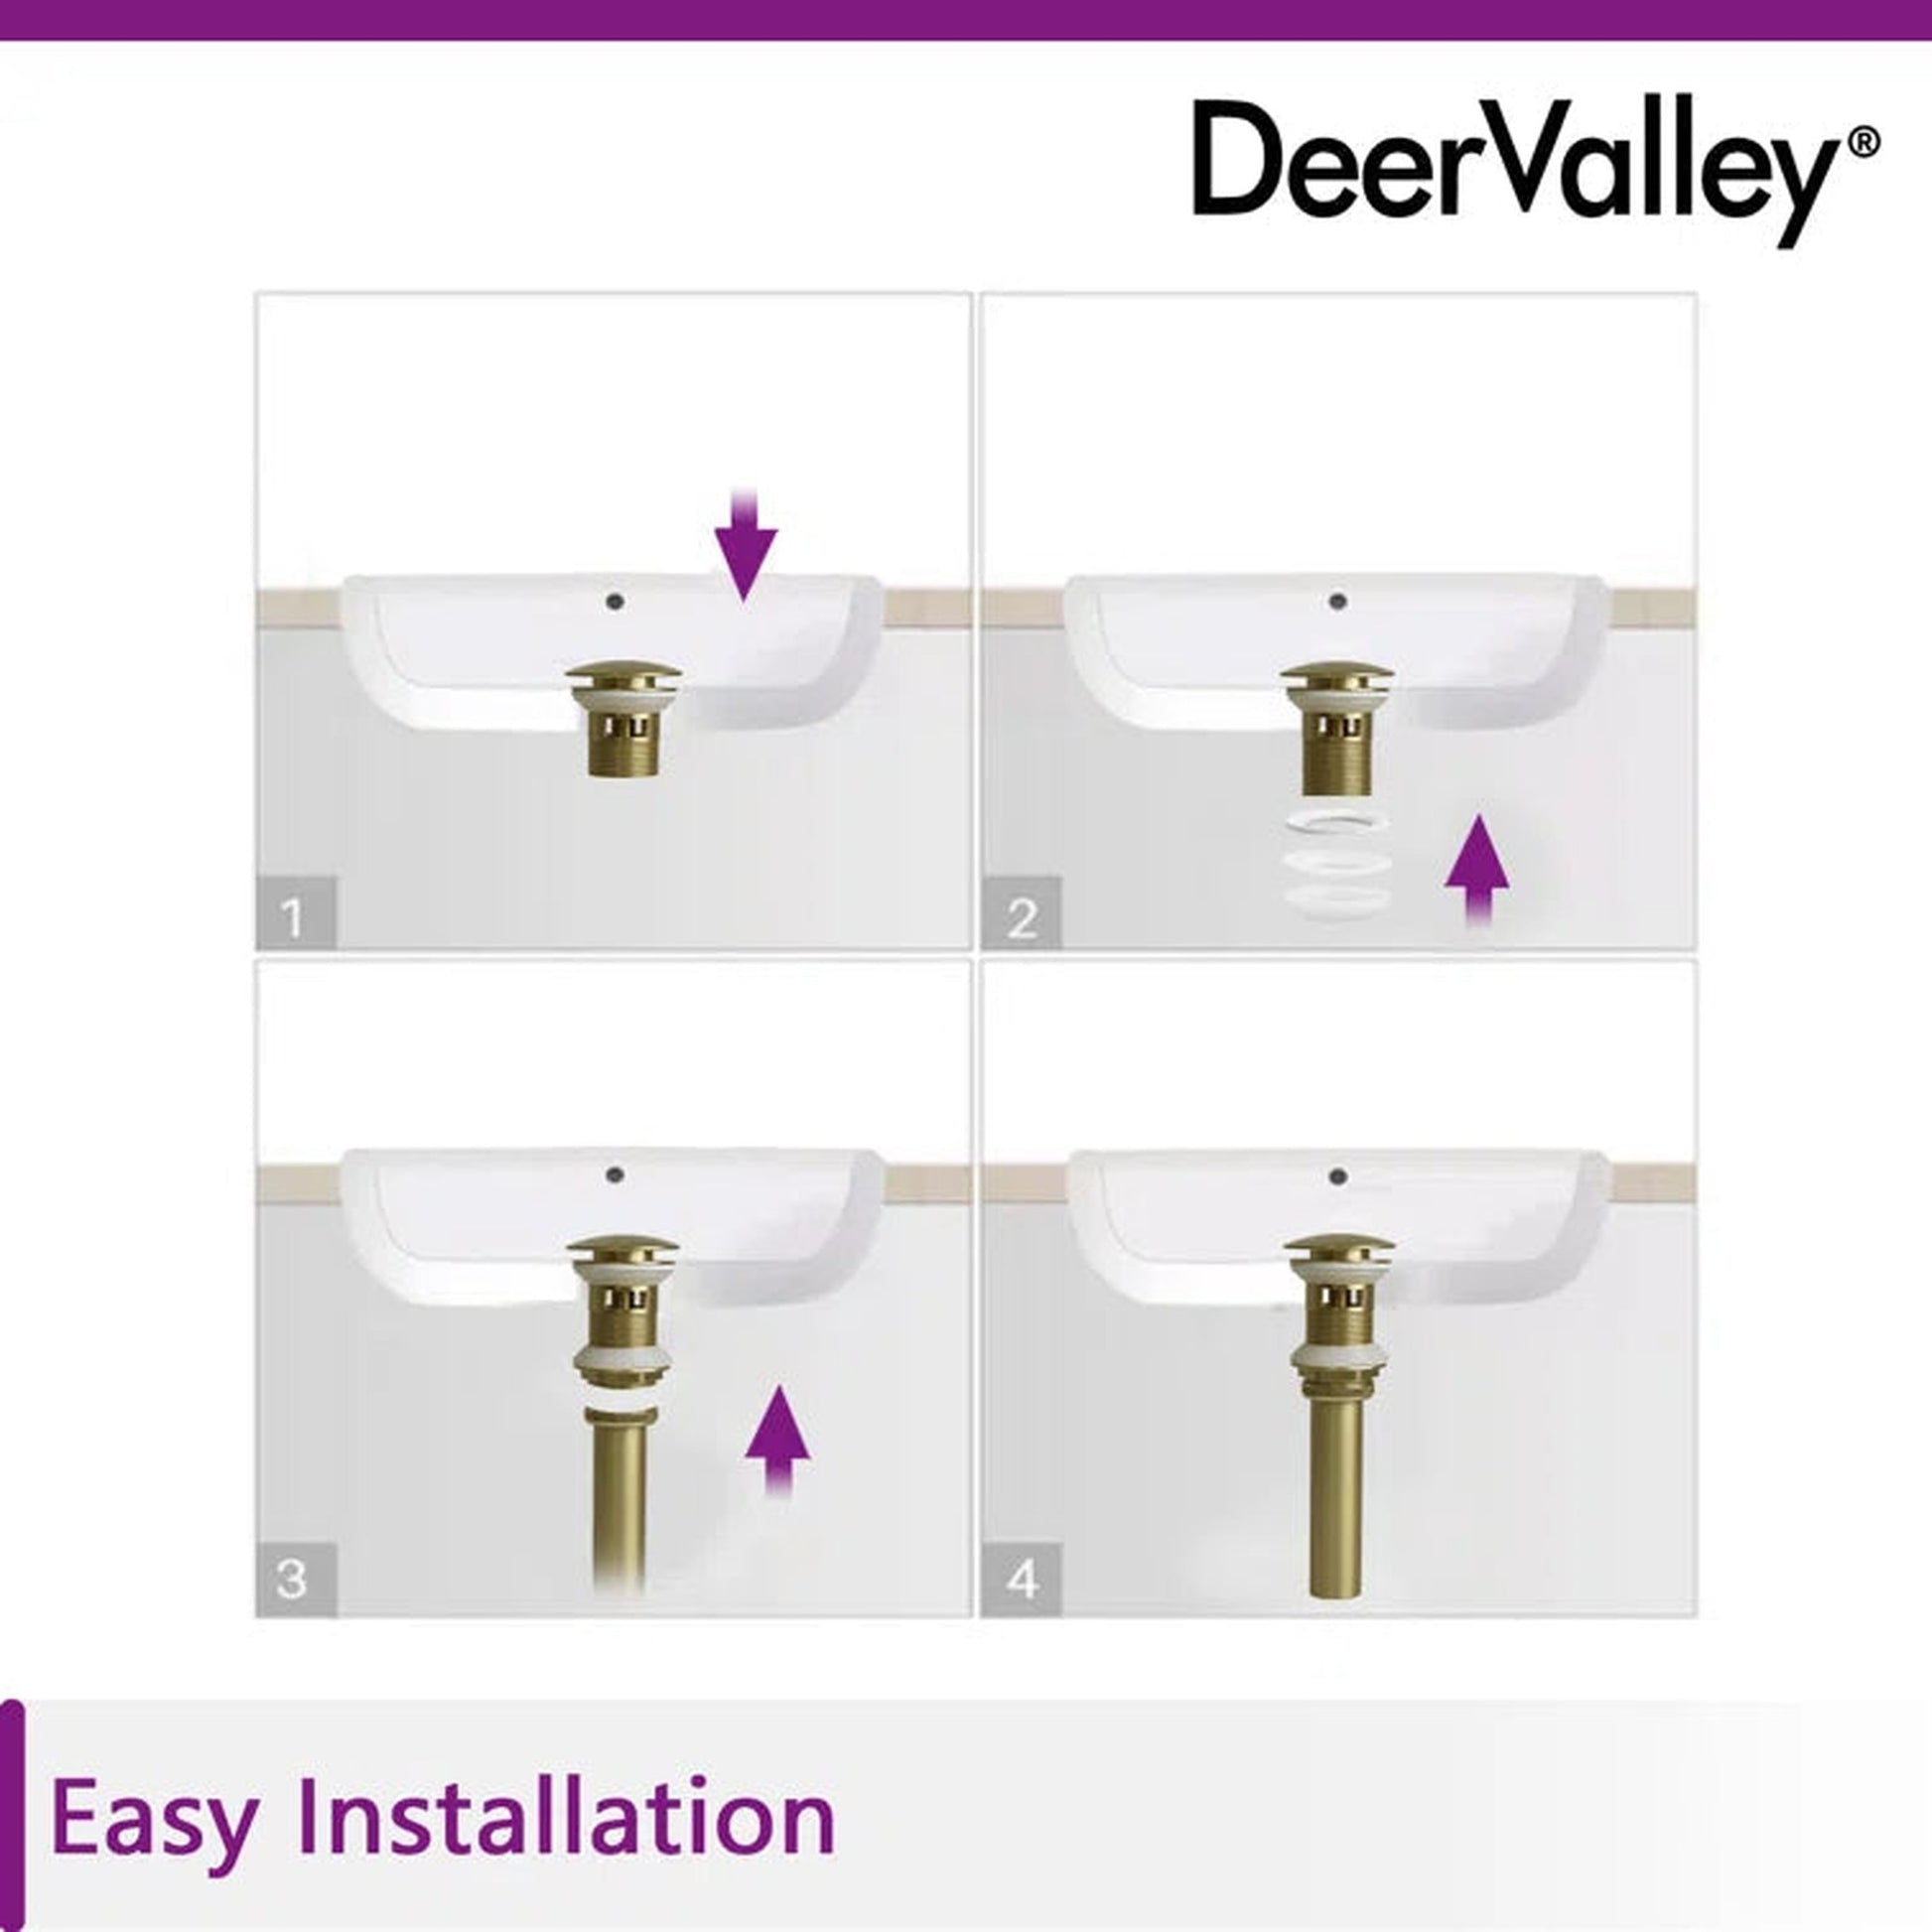 DeerValley Gold Pop-Up Bathroom Sink Drain With Overflow